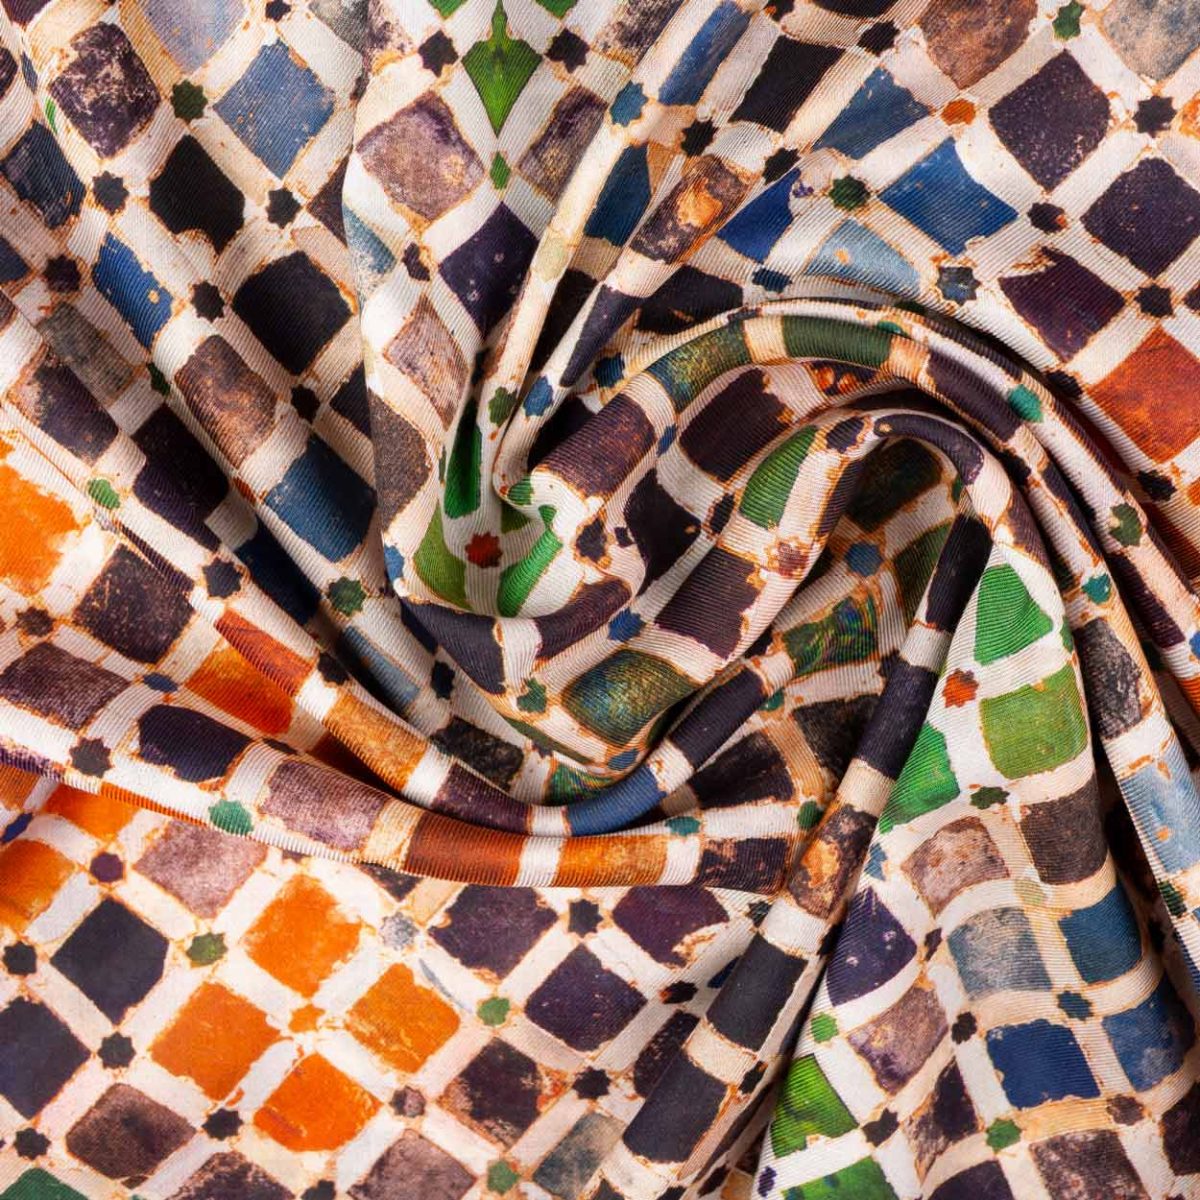 Detalle de pañuelo con estampado multicolor de mosaicos árabes